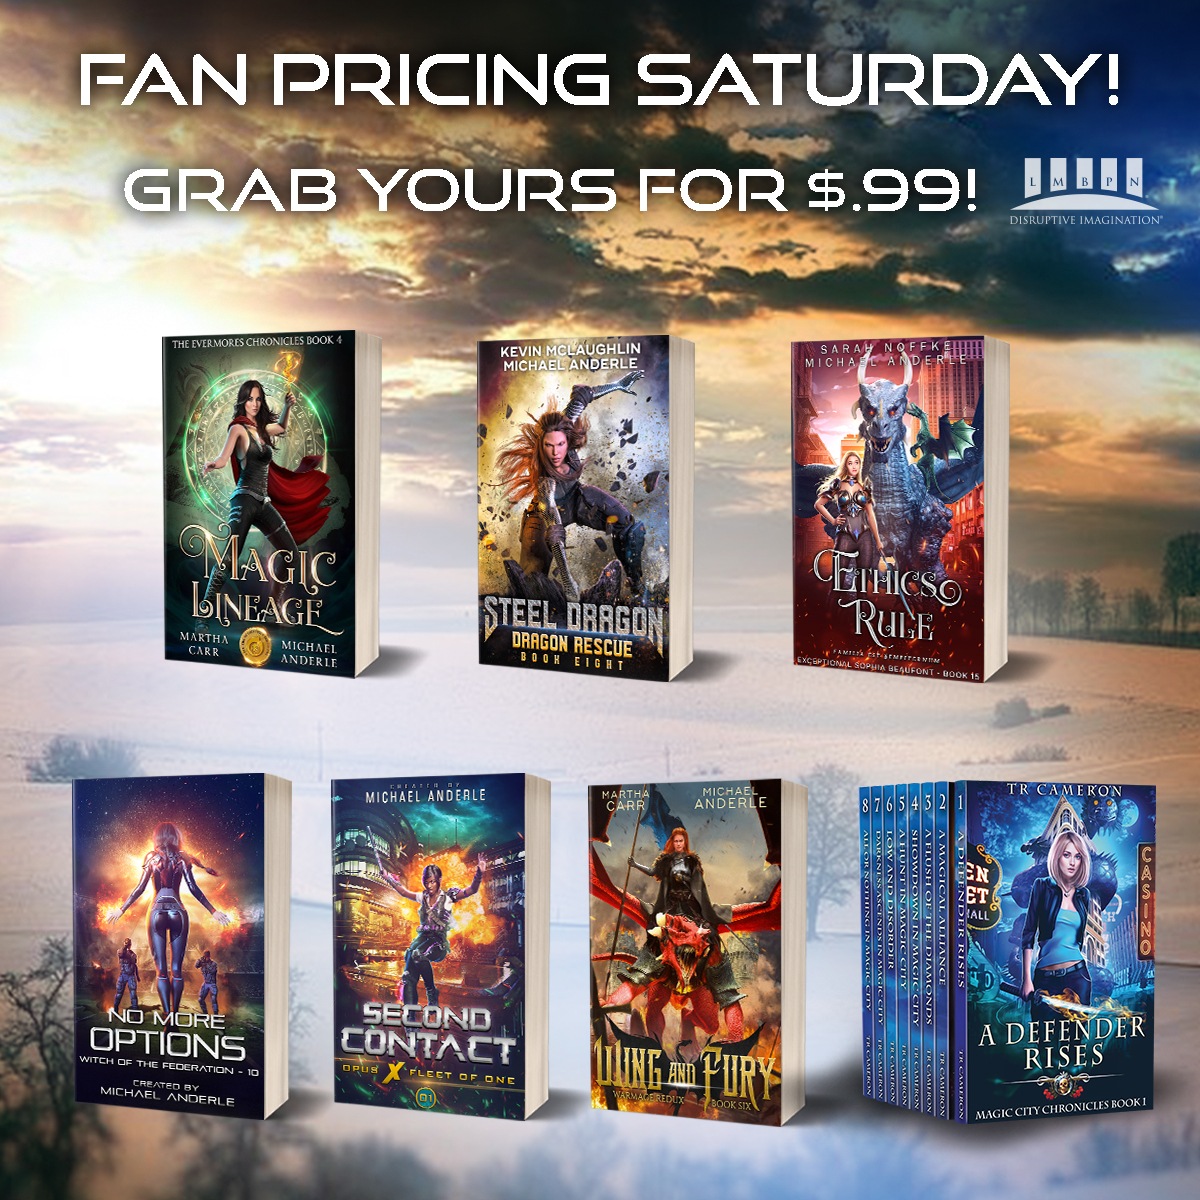 Wonder Woman fan pricing Saturday